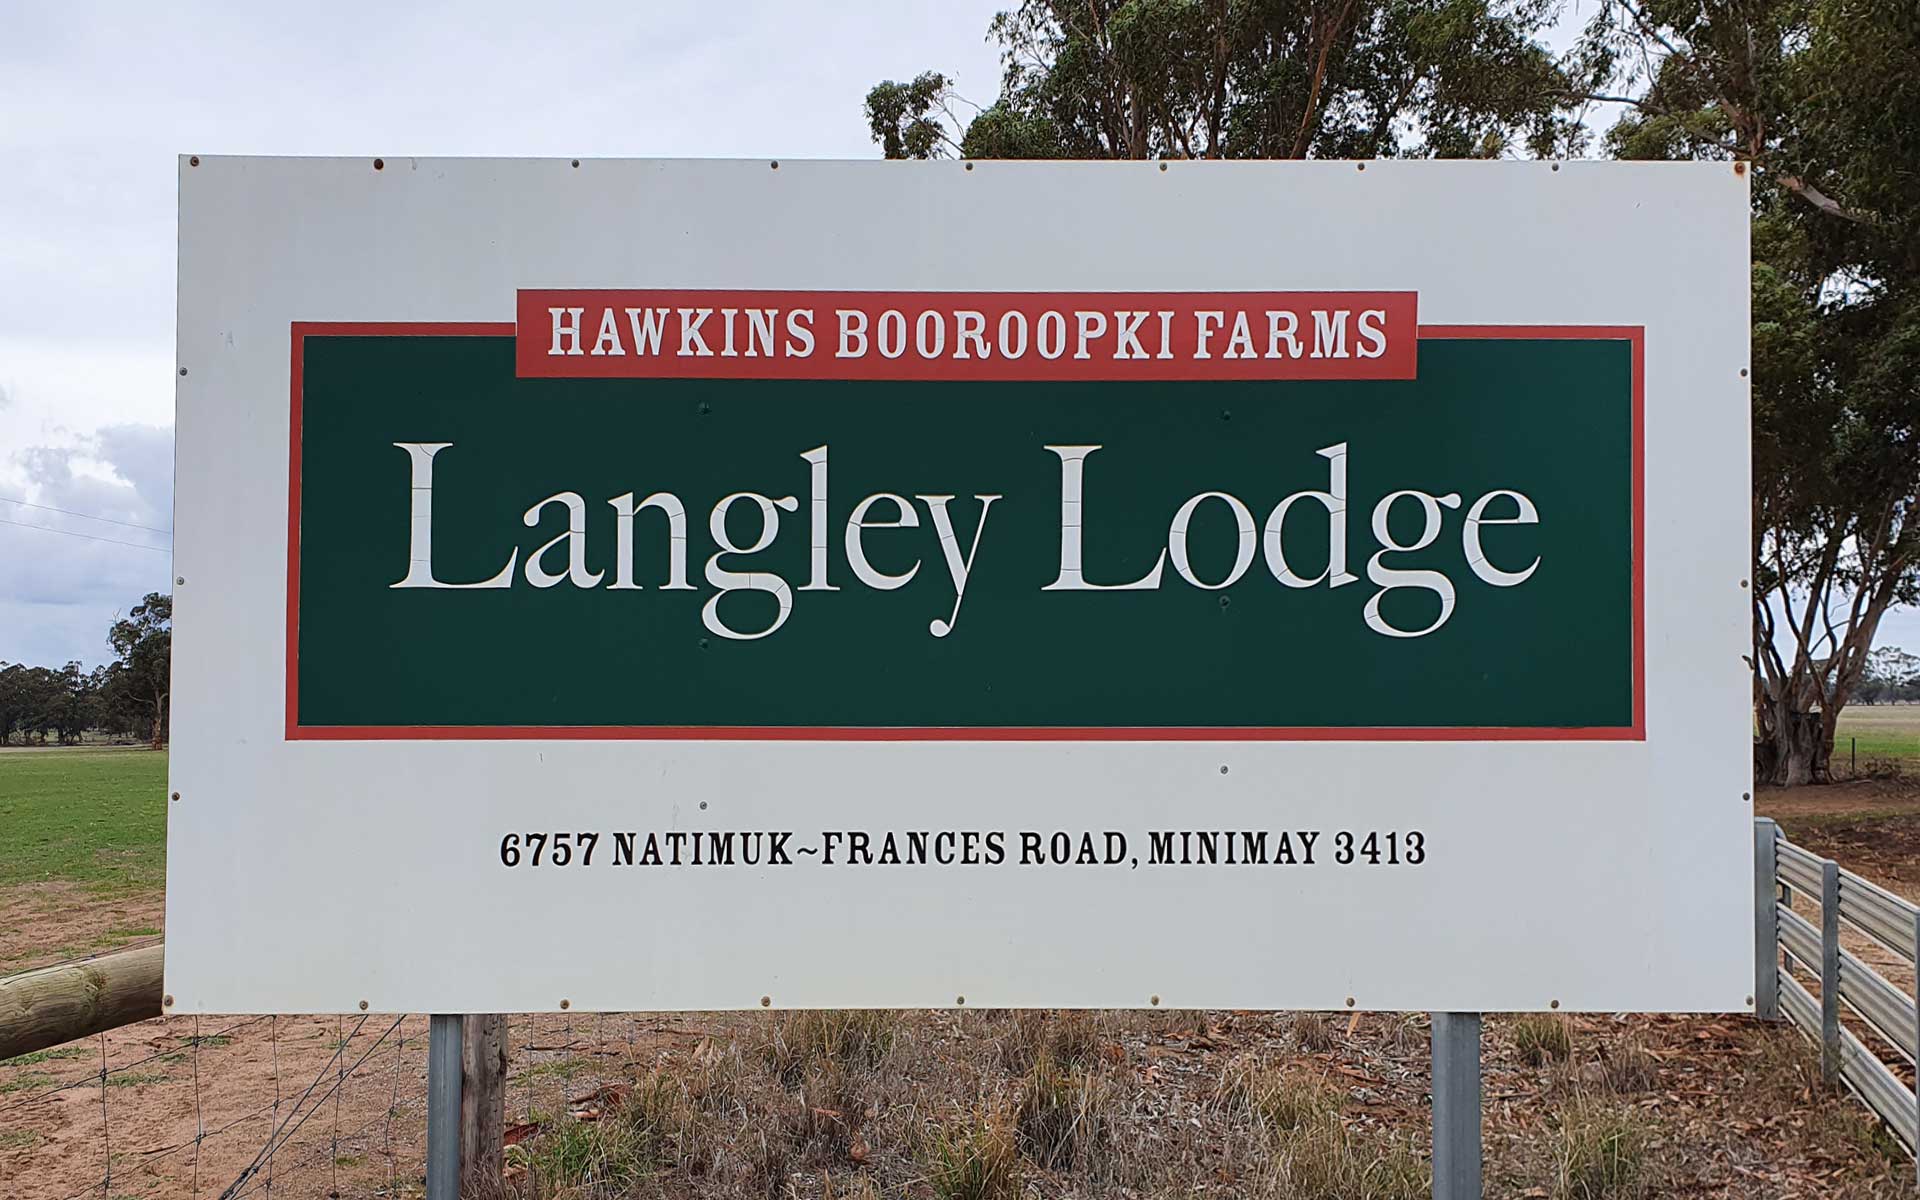 Langley Lodge, Hawkins Booroopki Farms